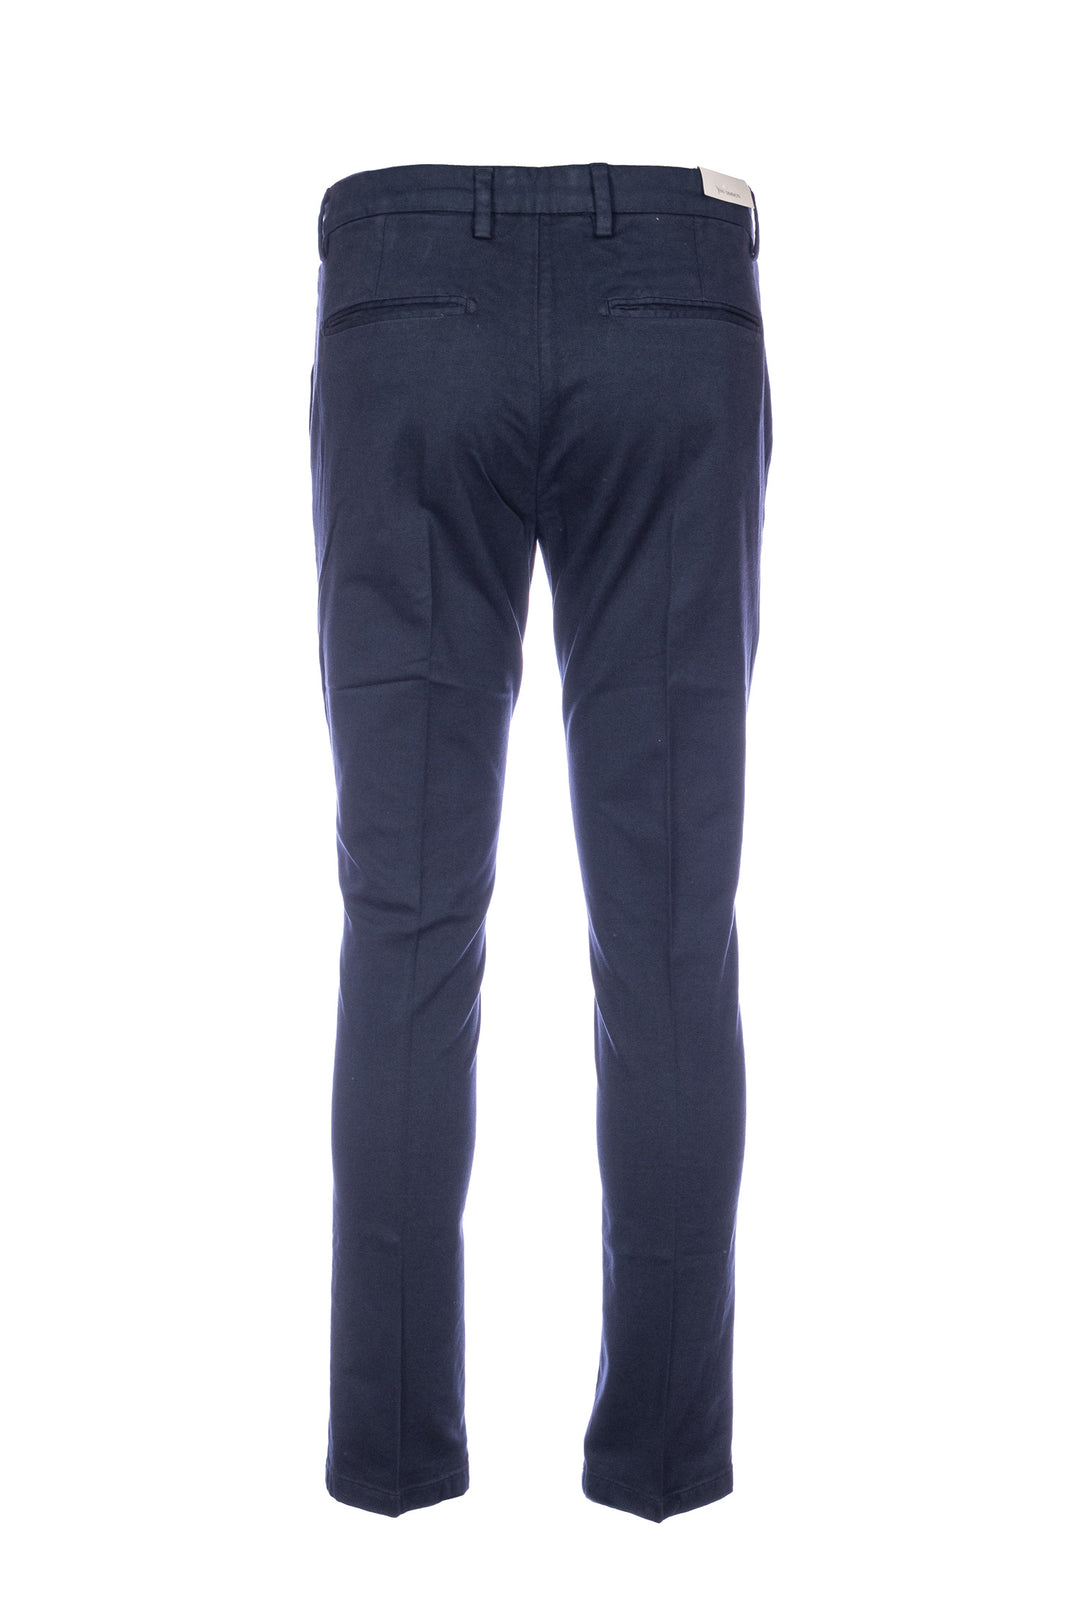 YAN SIMMON Pantalone blu navy in gabardina di cotone elasticizzato - Mancinelli 1954